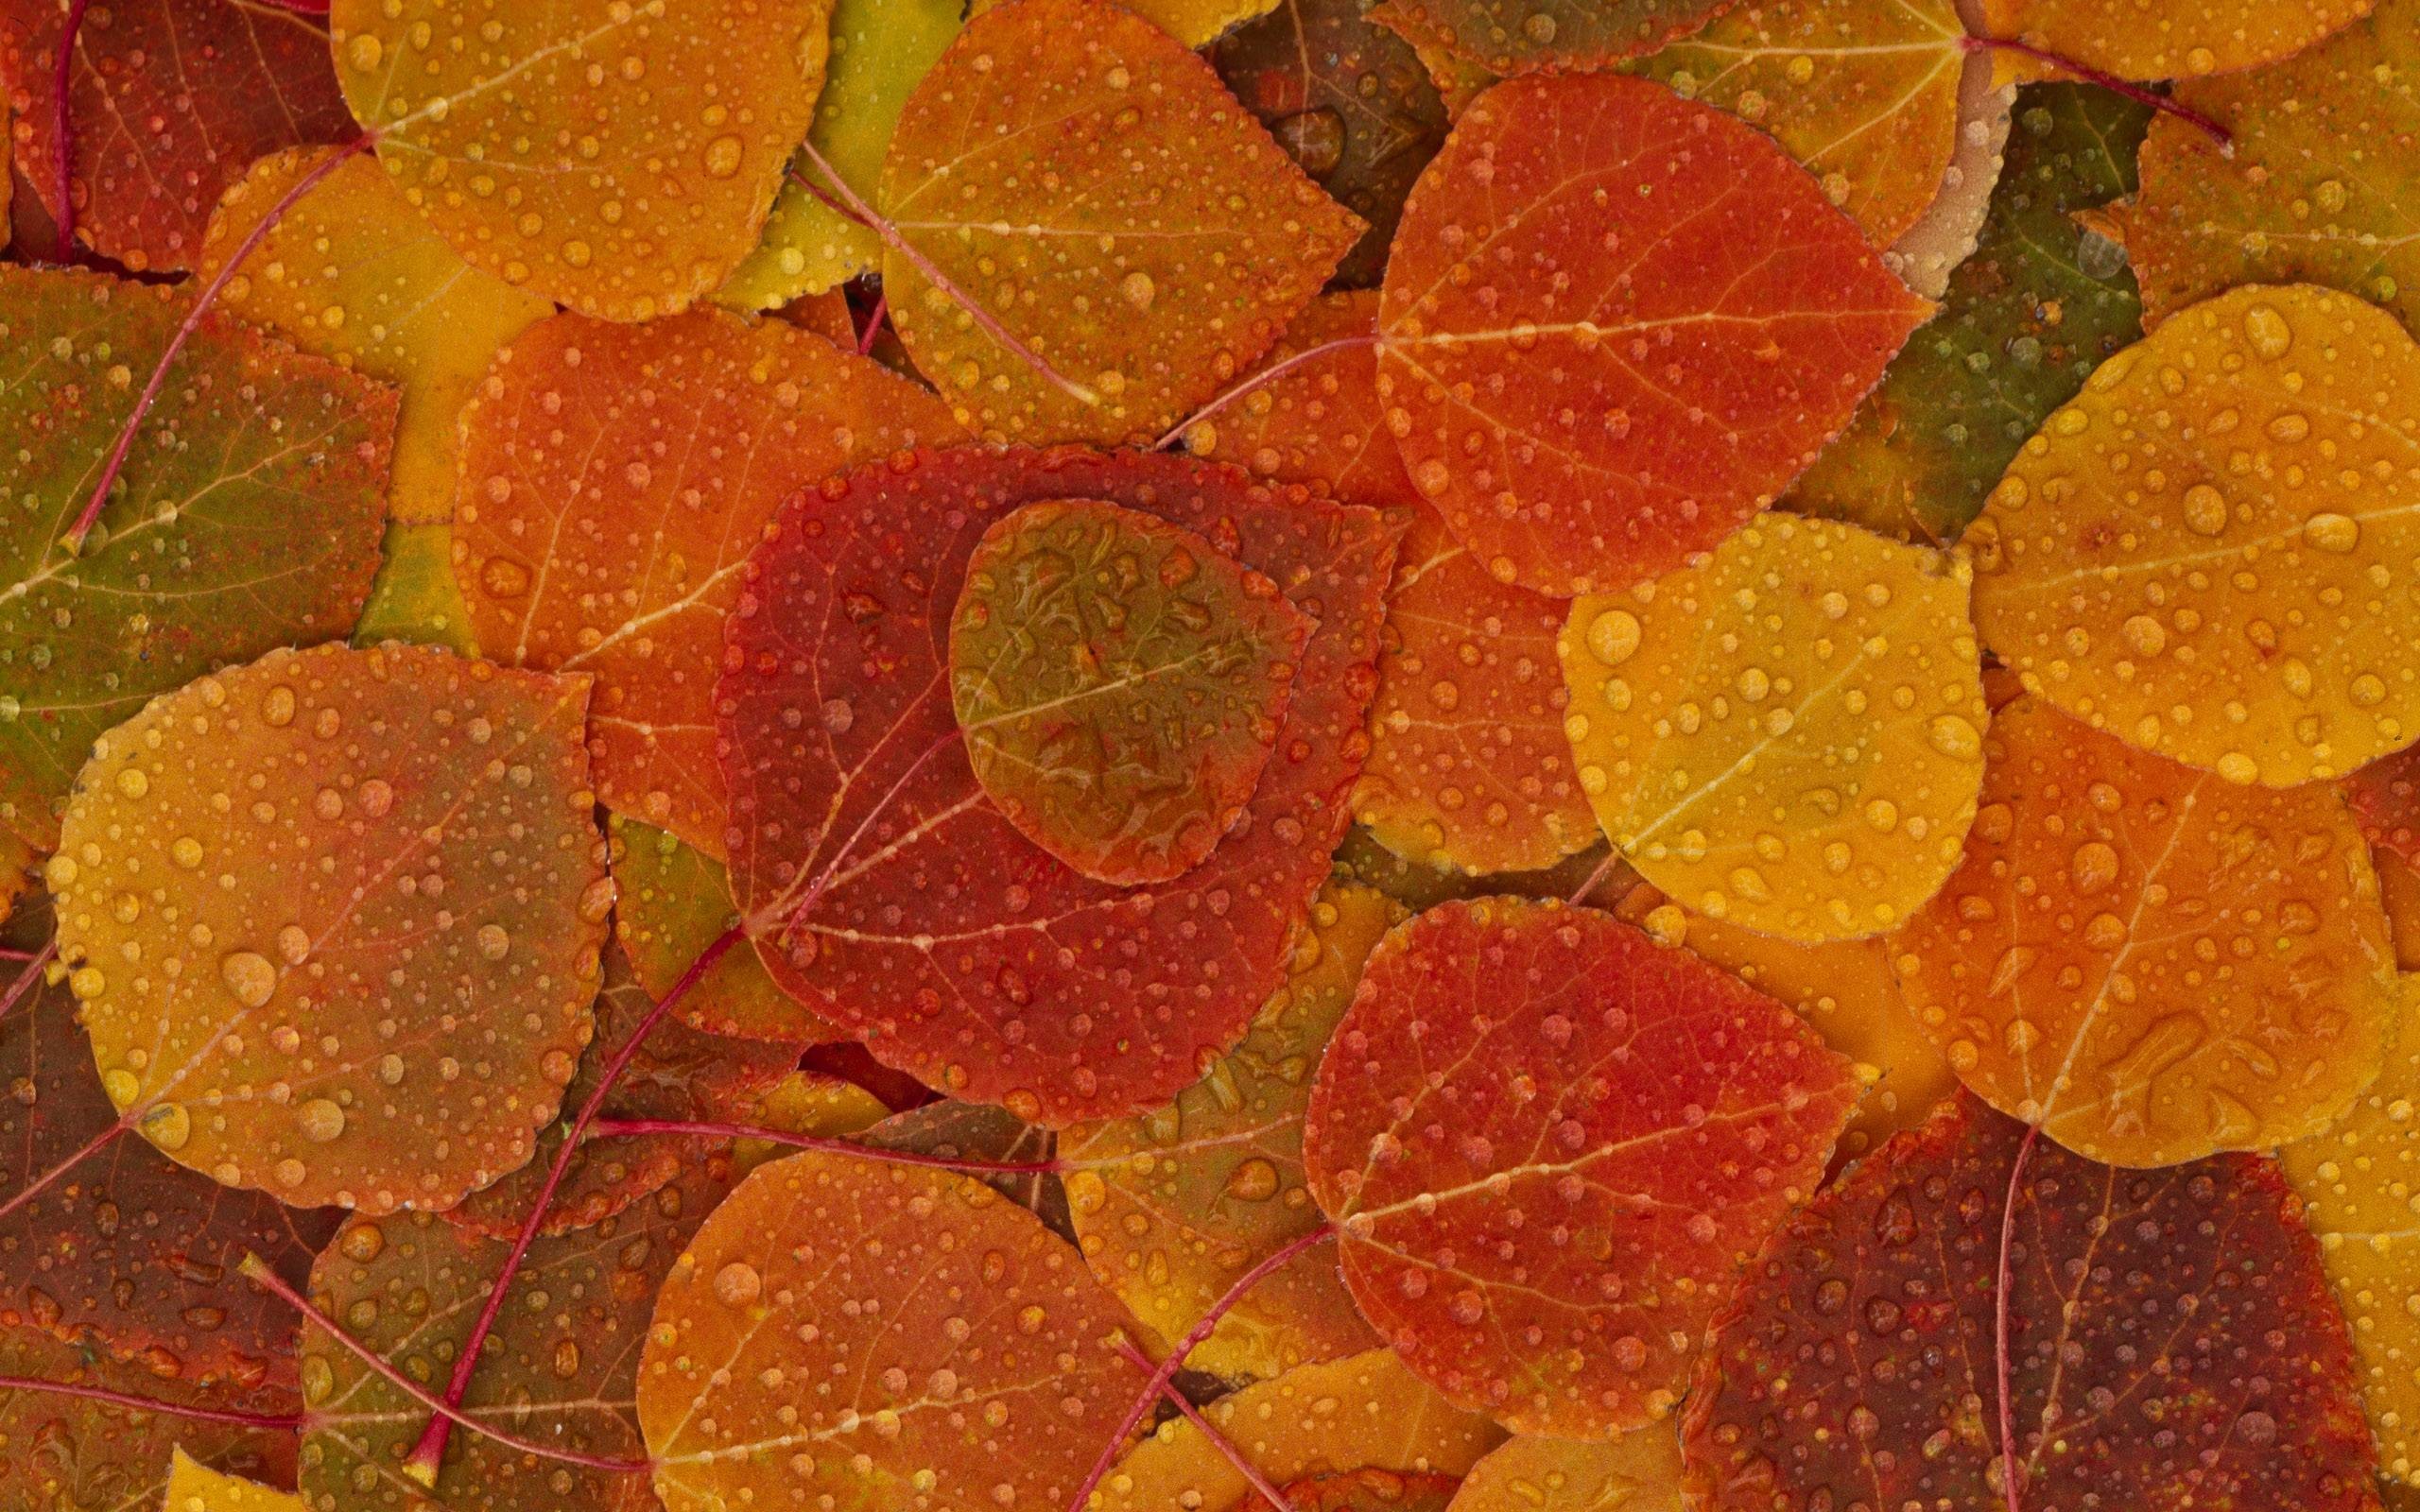 2560x1600 Aspen Leaves Wallpaper Autumn Nature Wallpapers in jpg format for